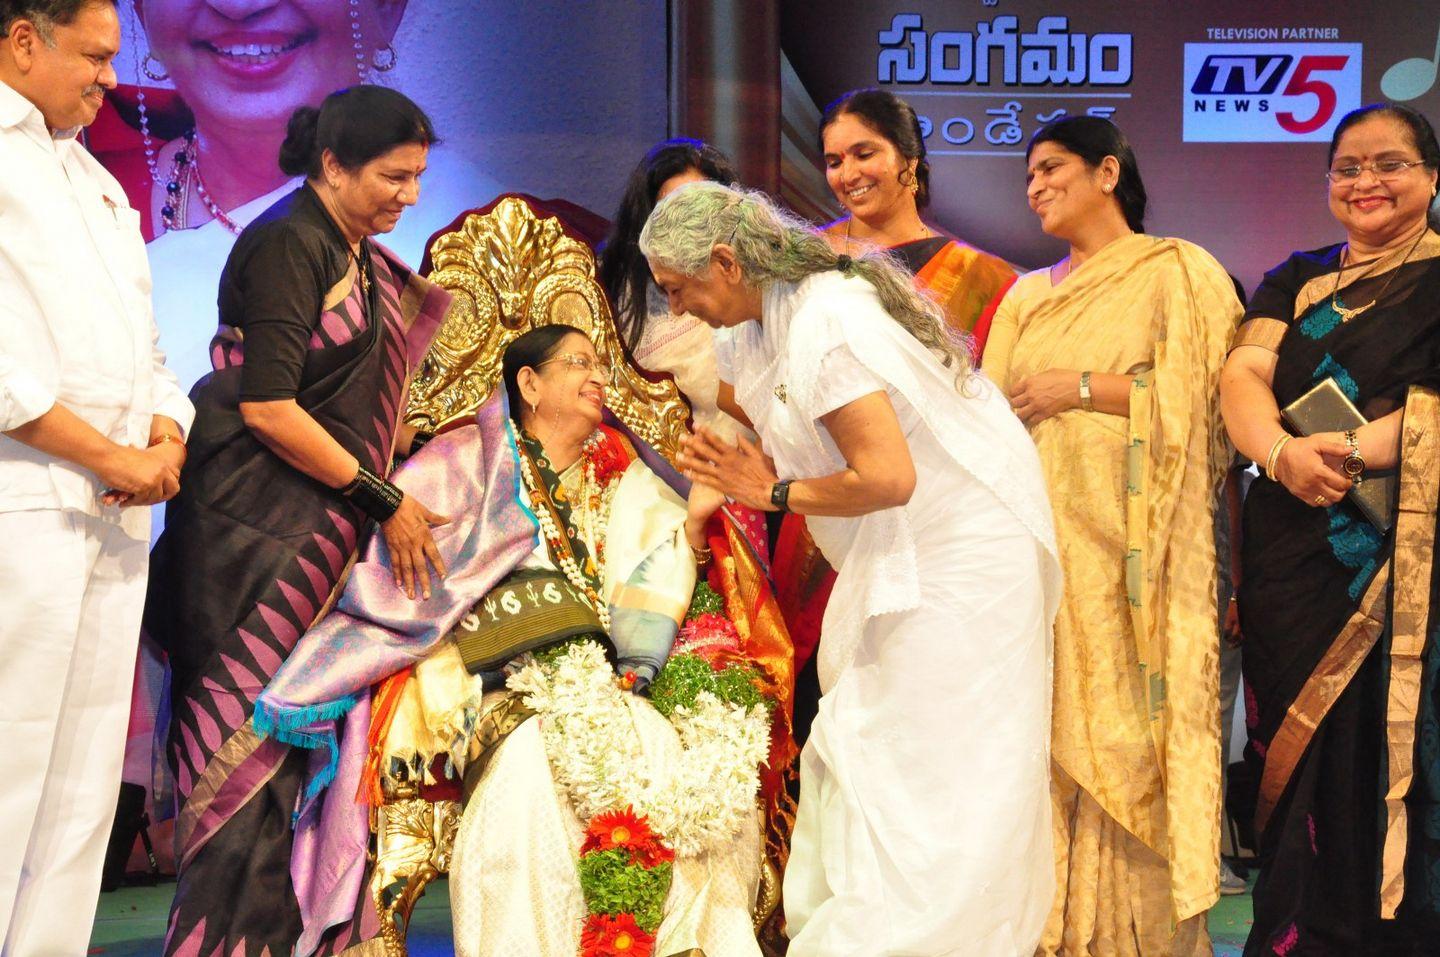 Sangama Foundation Swara Samraagni Given to P Suseela Photos